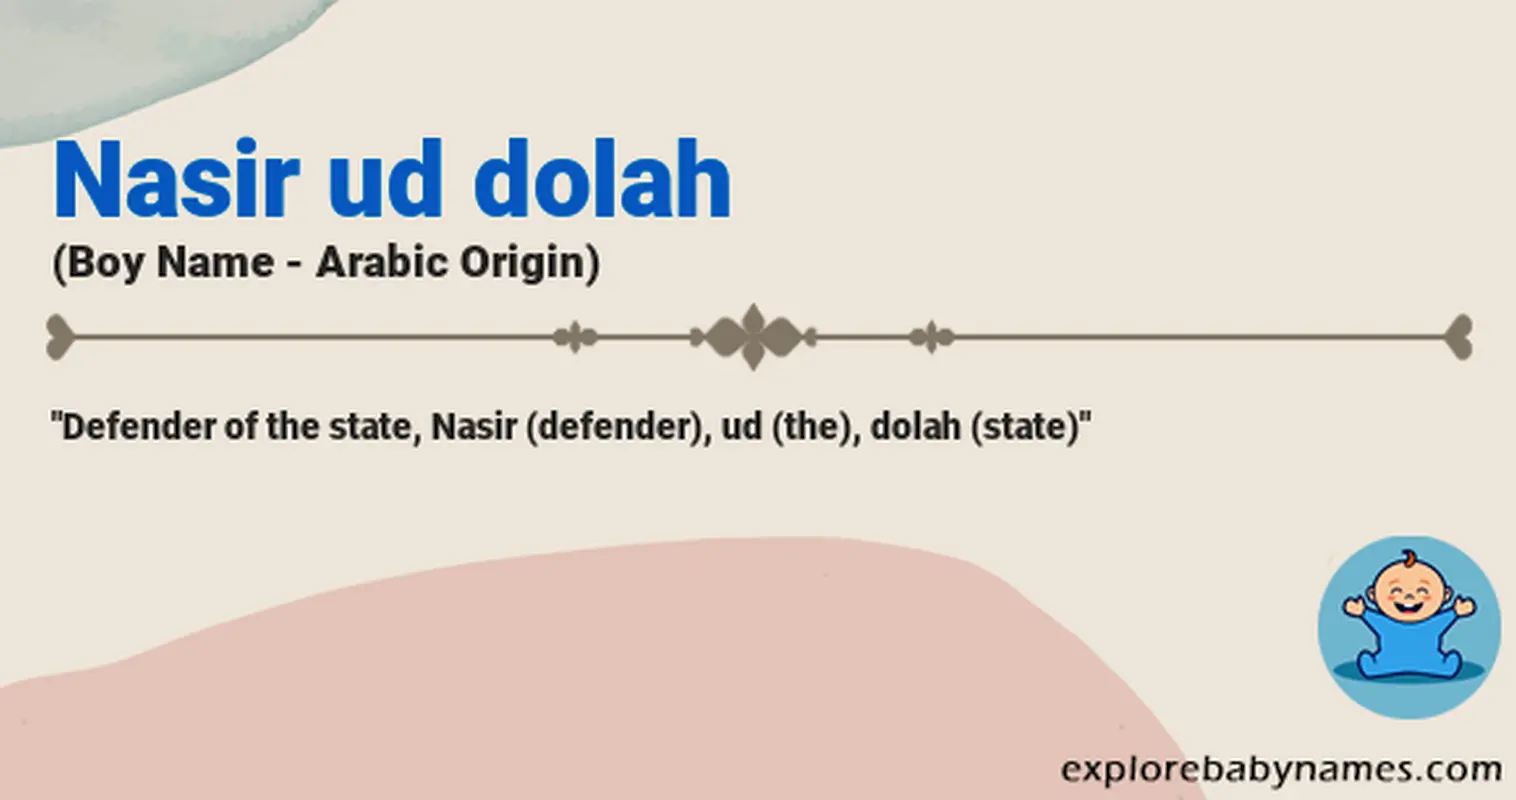 Meaning of Nasir ud dolah